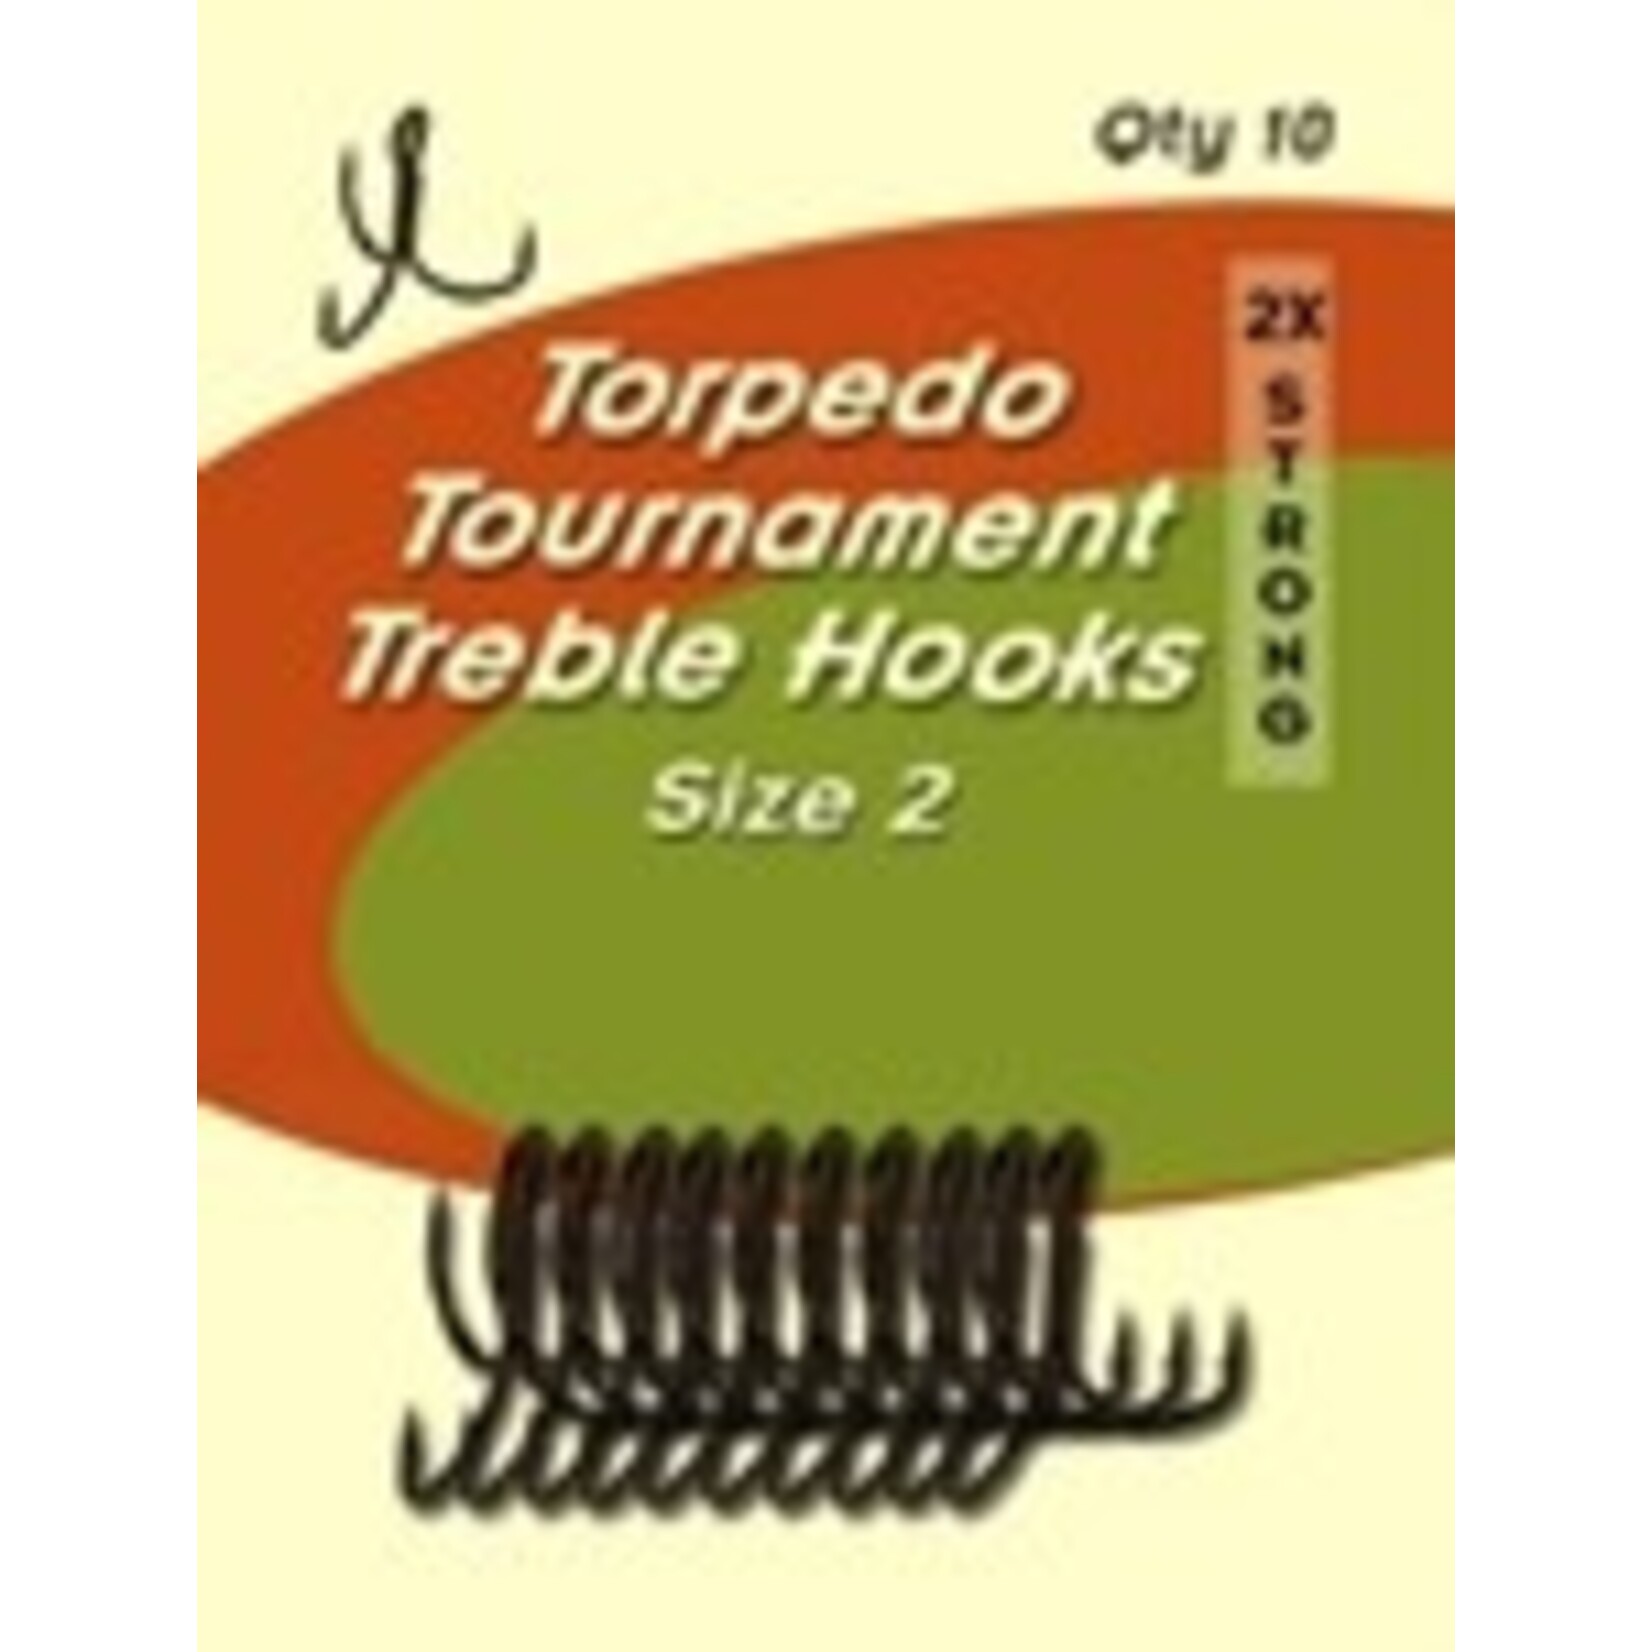 TORPEDO TOURNAMENT TREBLE HOOKS